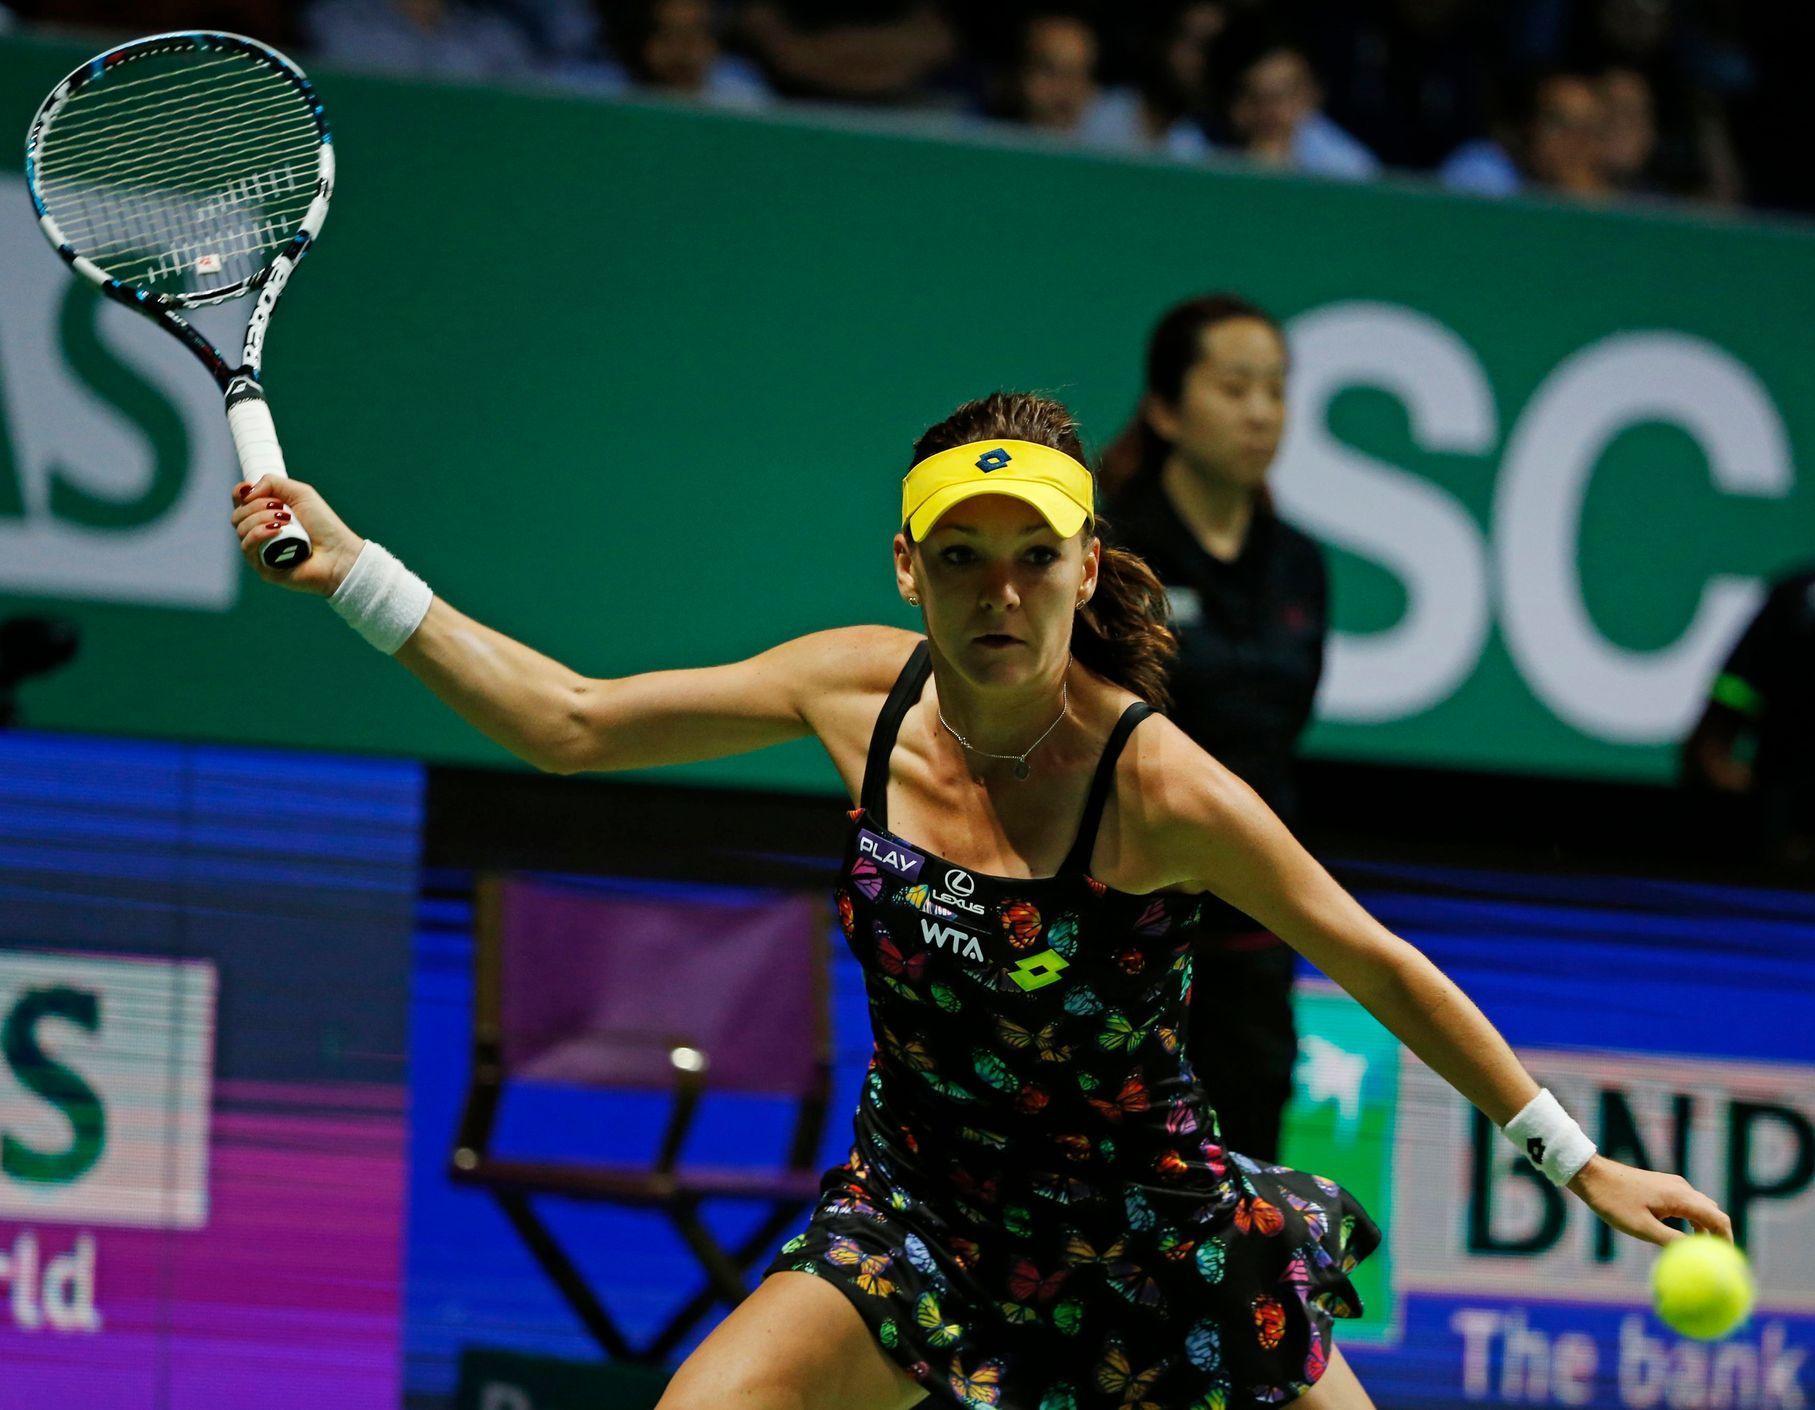 Radwanska of Poland hits a return to Kvitova of the Czech Republic during their WTA Finals singles tennis match at the Singapore Indoor Stadium